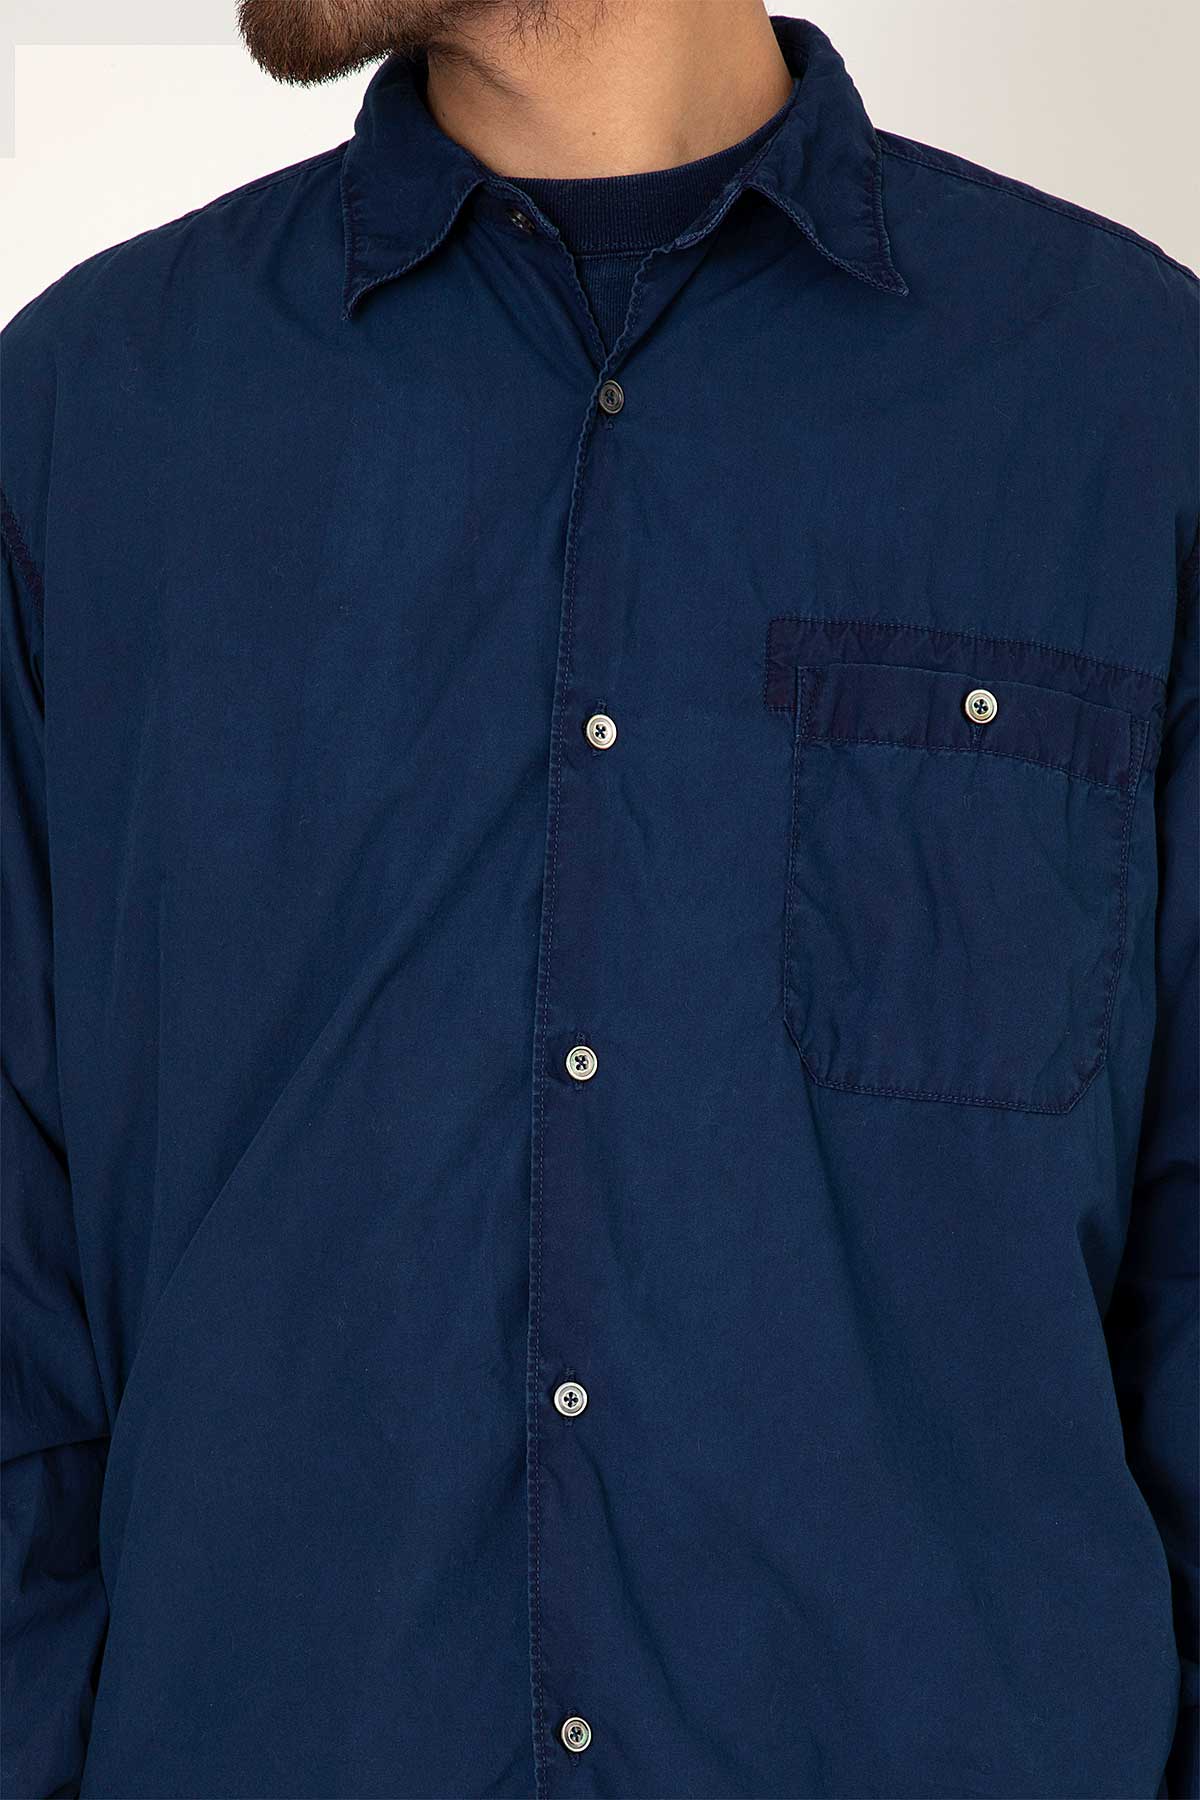 Men's Indigo Cotton Twill Jacket from India - Breezy Day in Indigo